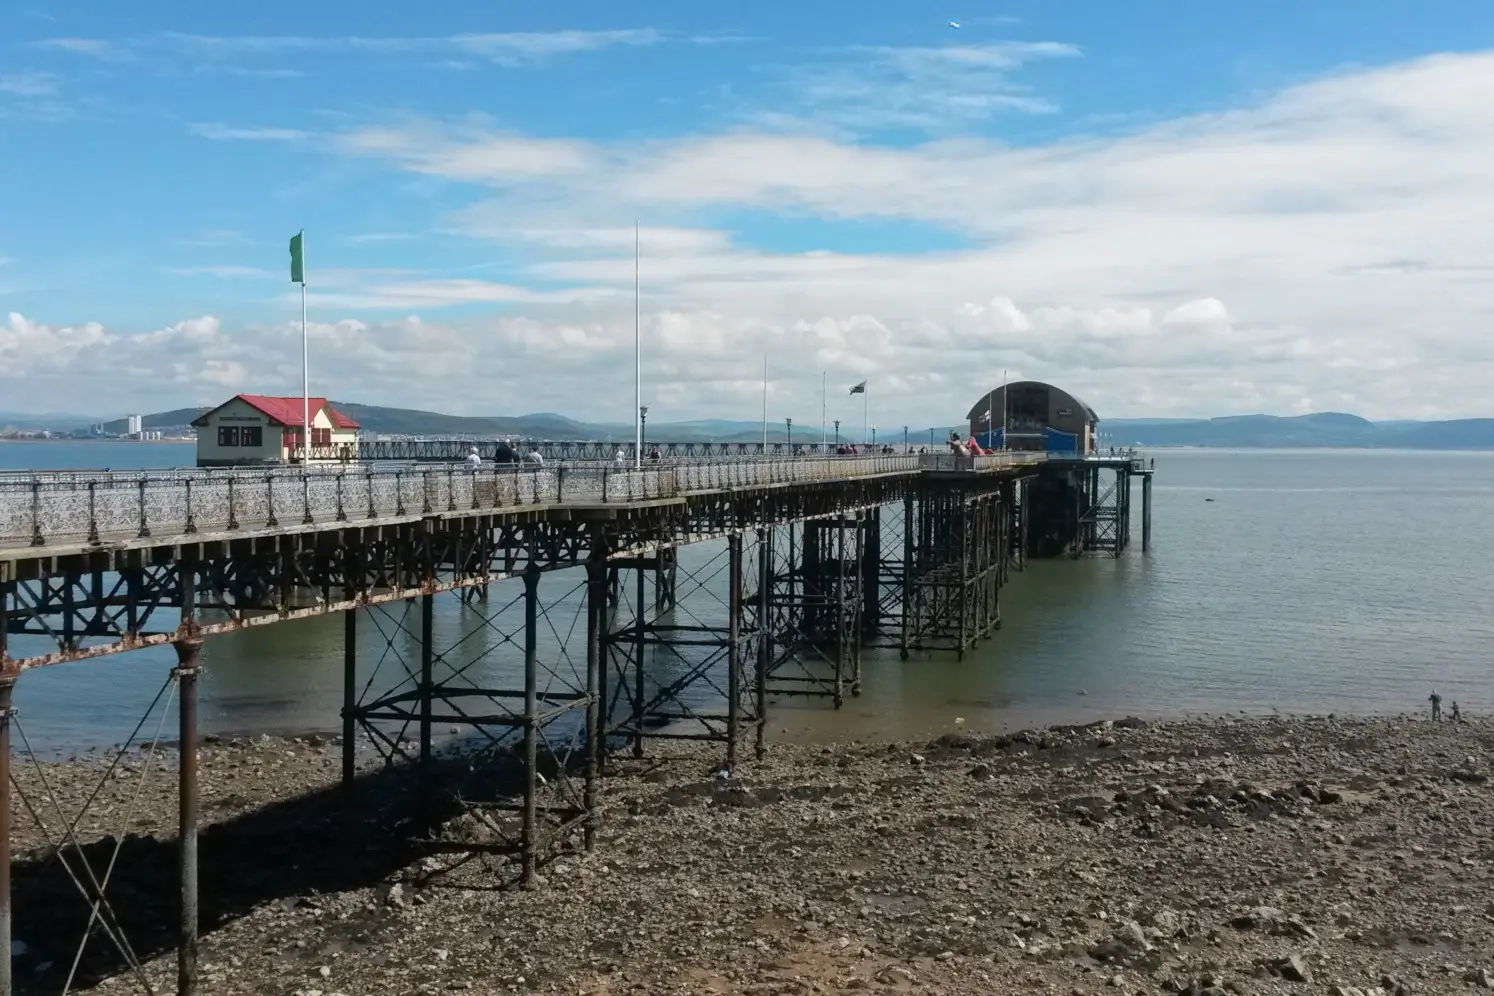 Swansea Mumbles Pier in South Wales